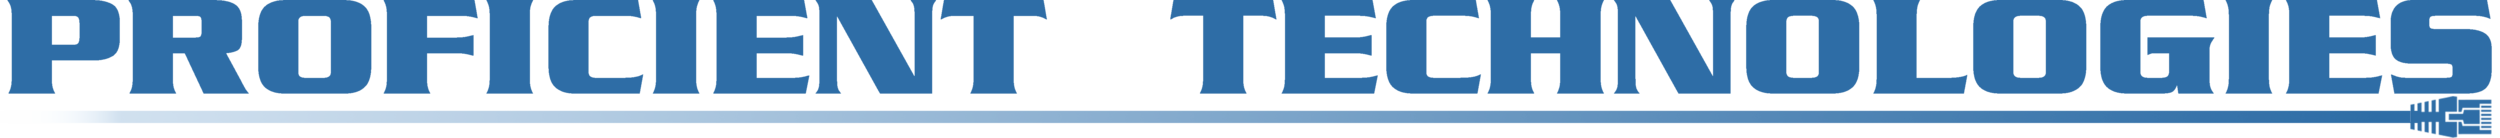 Proficient Technologies logo